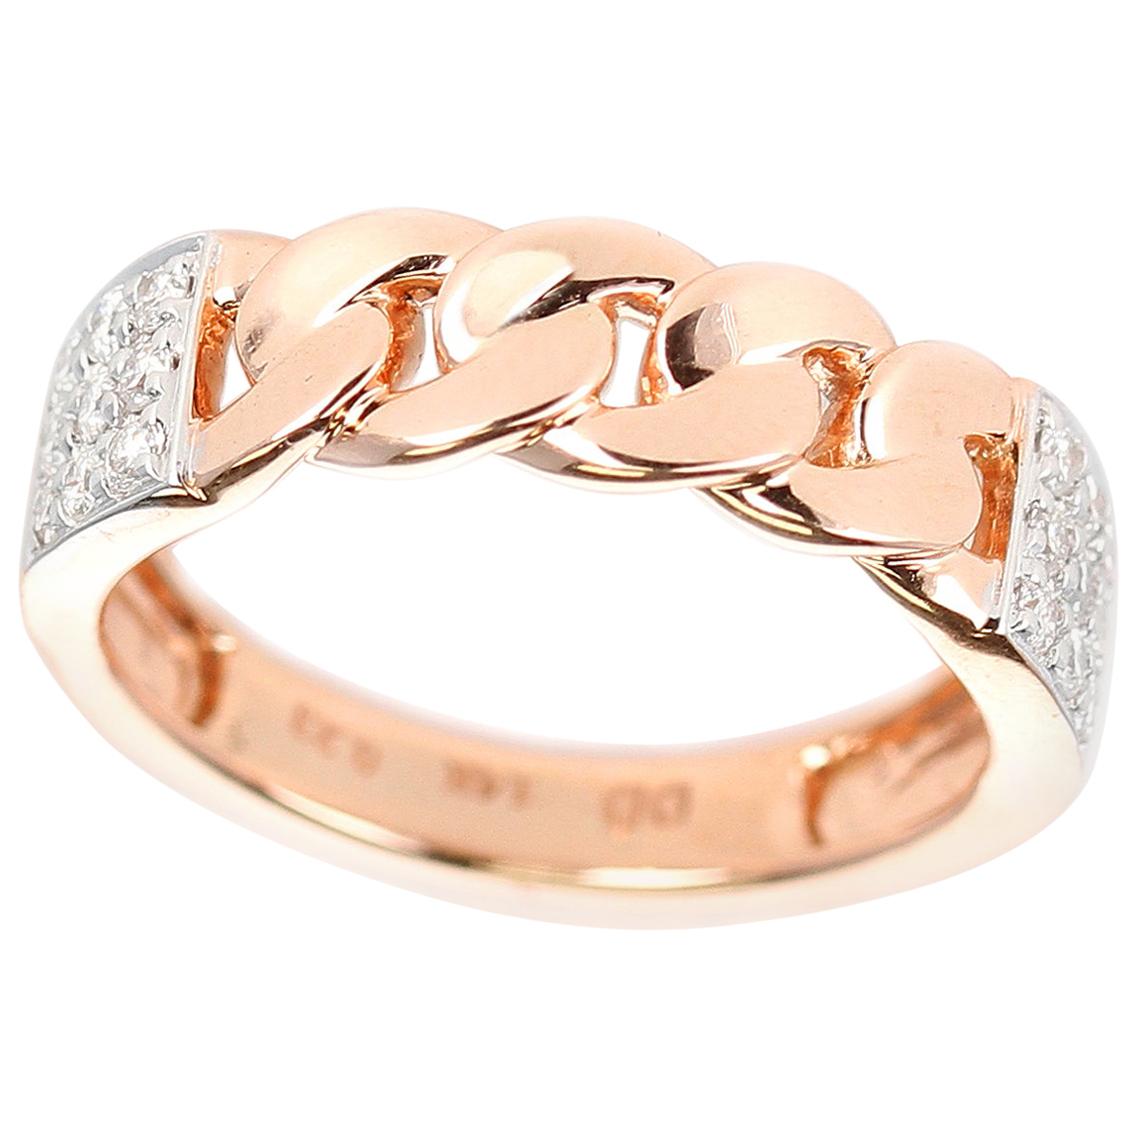 Rose Gold Rope-Style Ring with Diamonds, 14 Karat